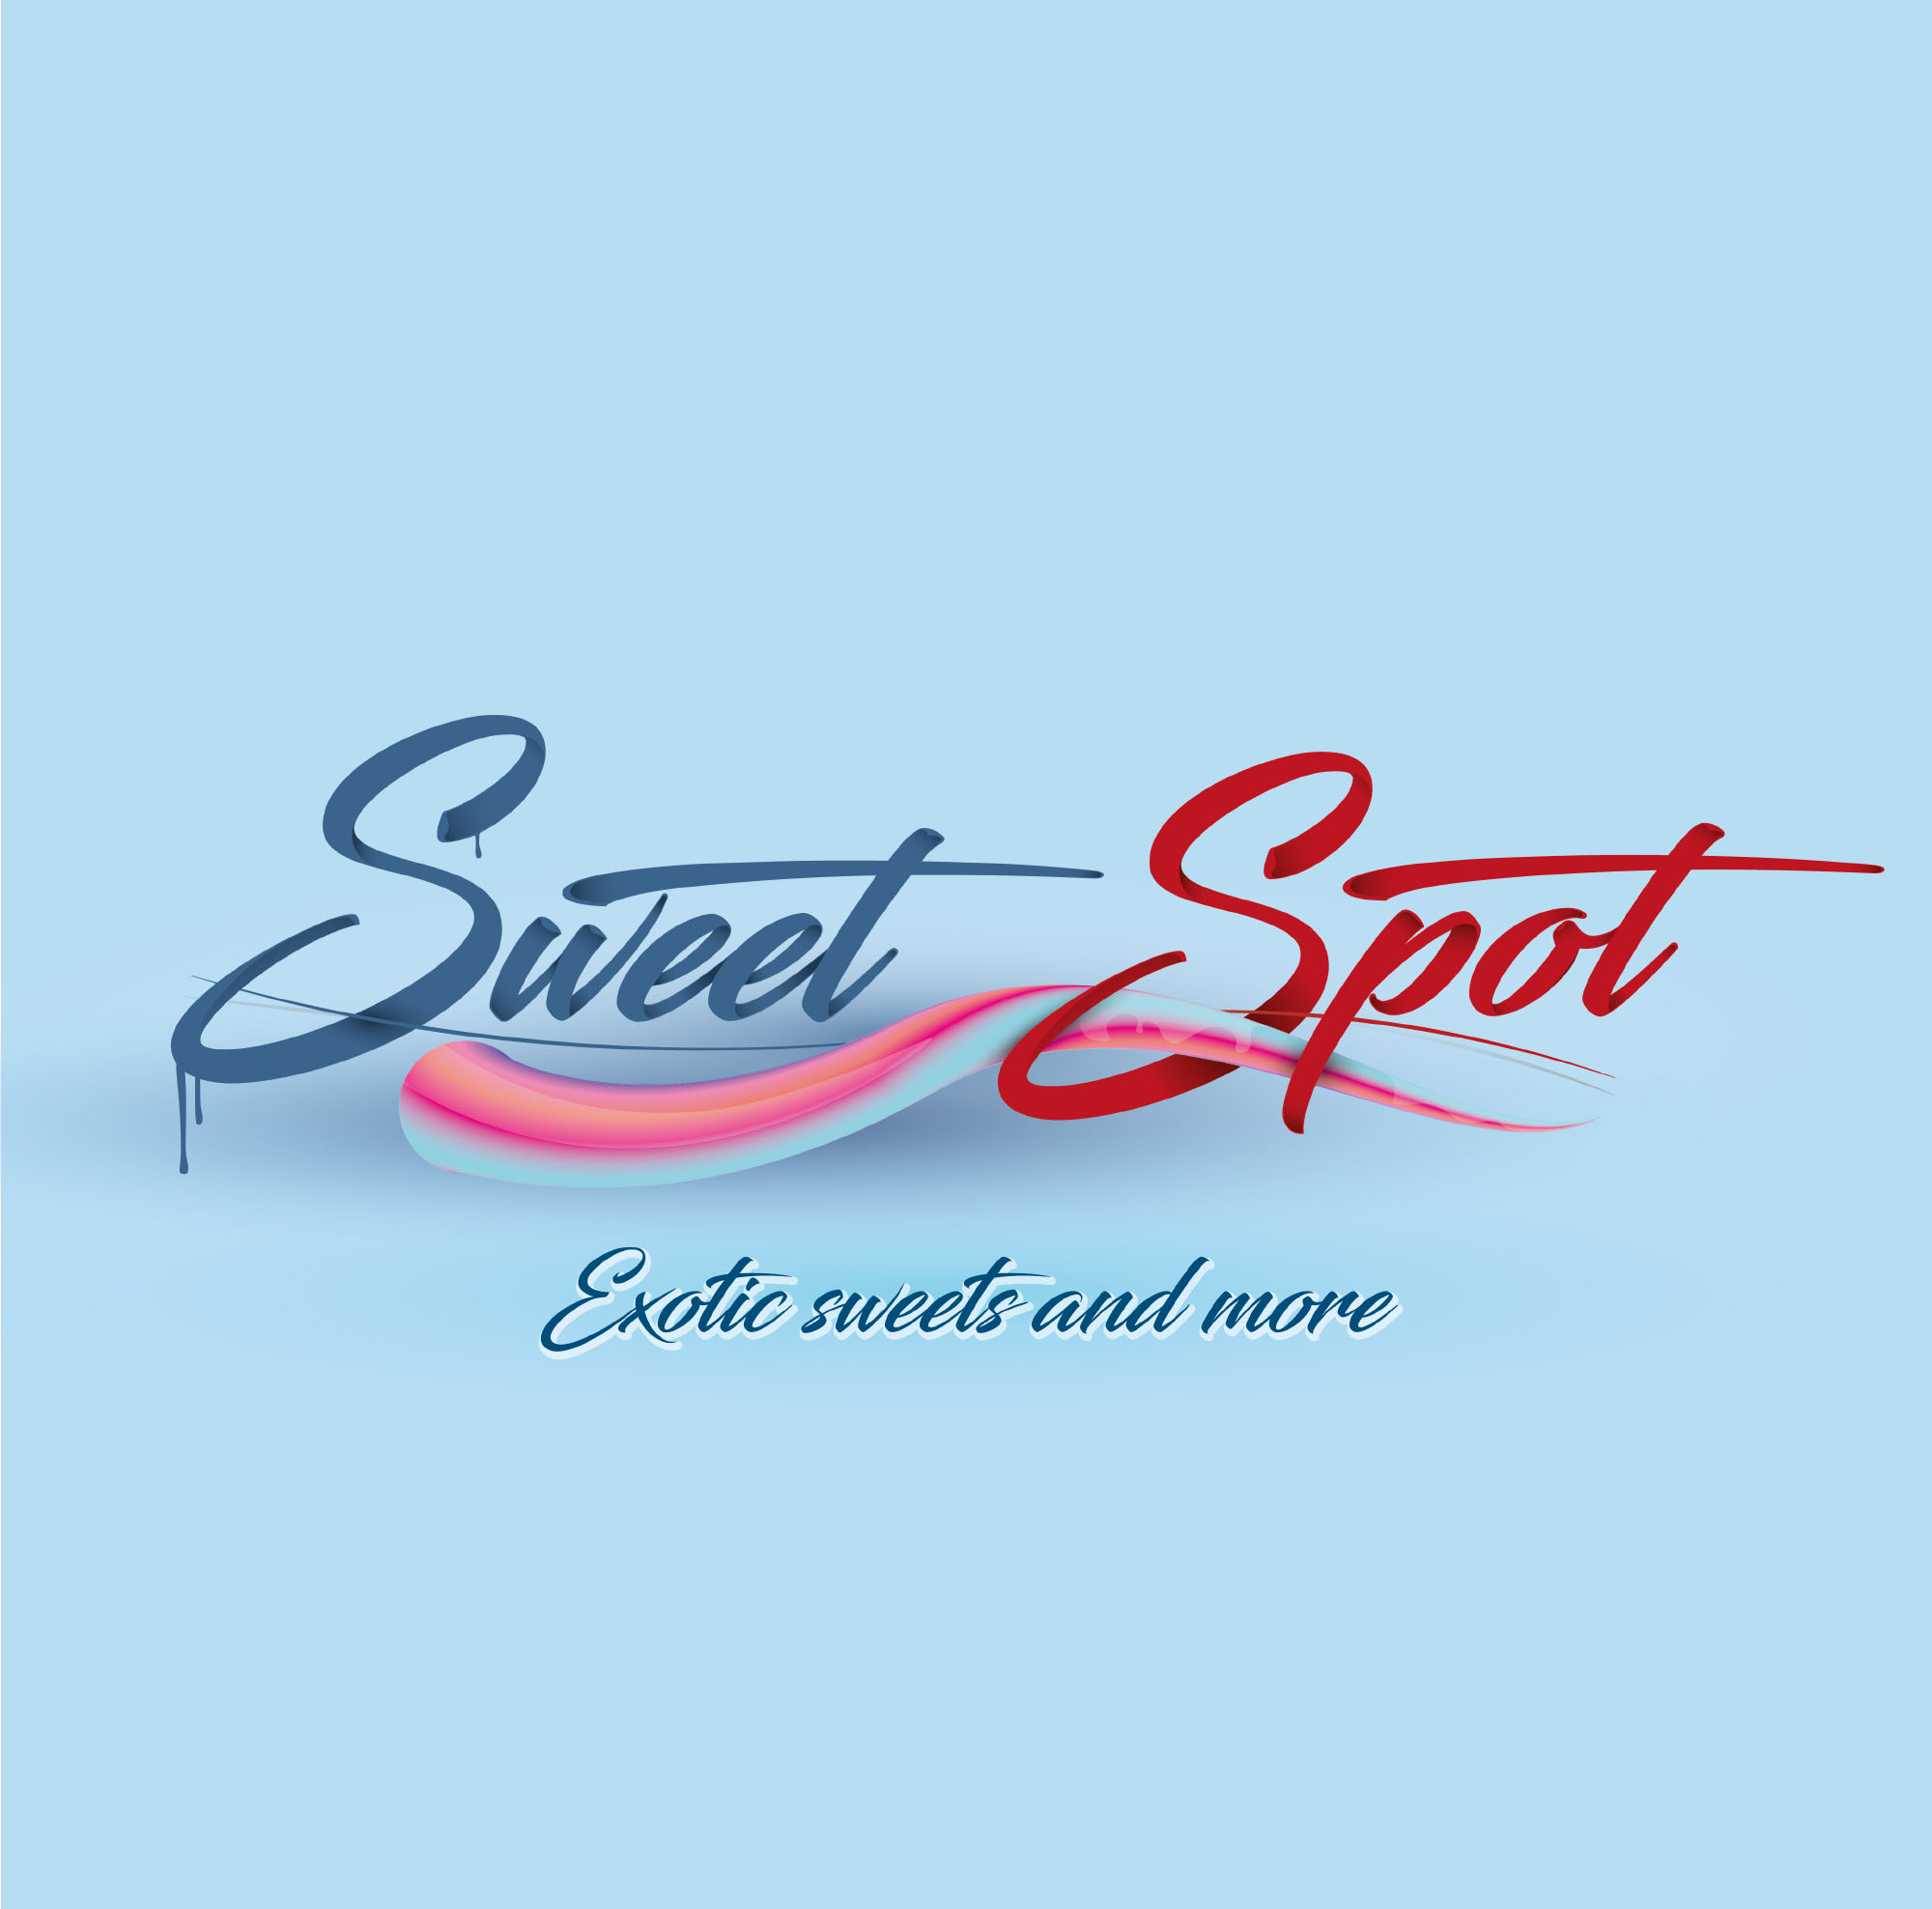 sweetspot logo design